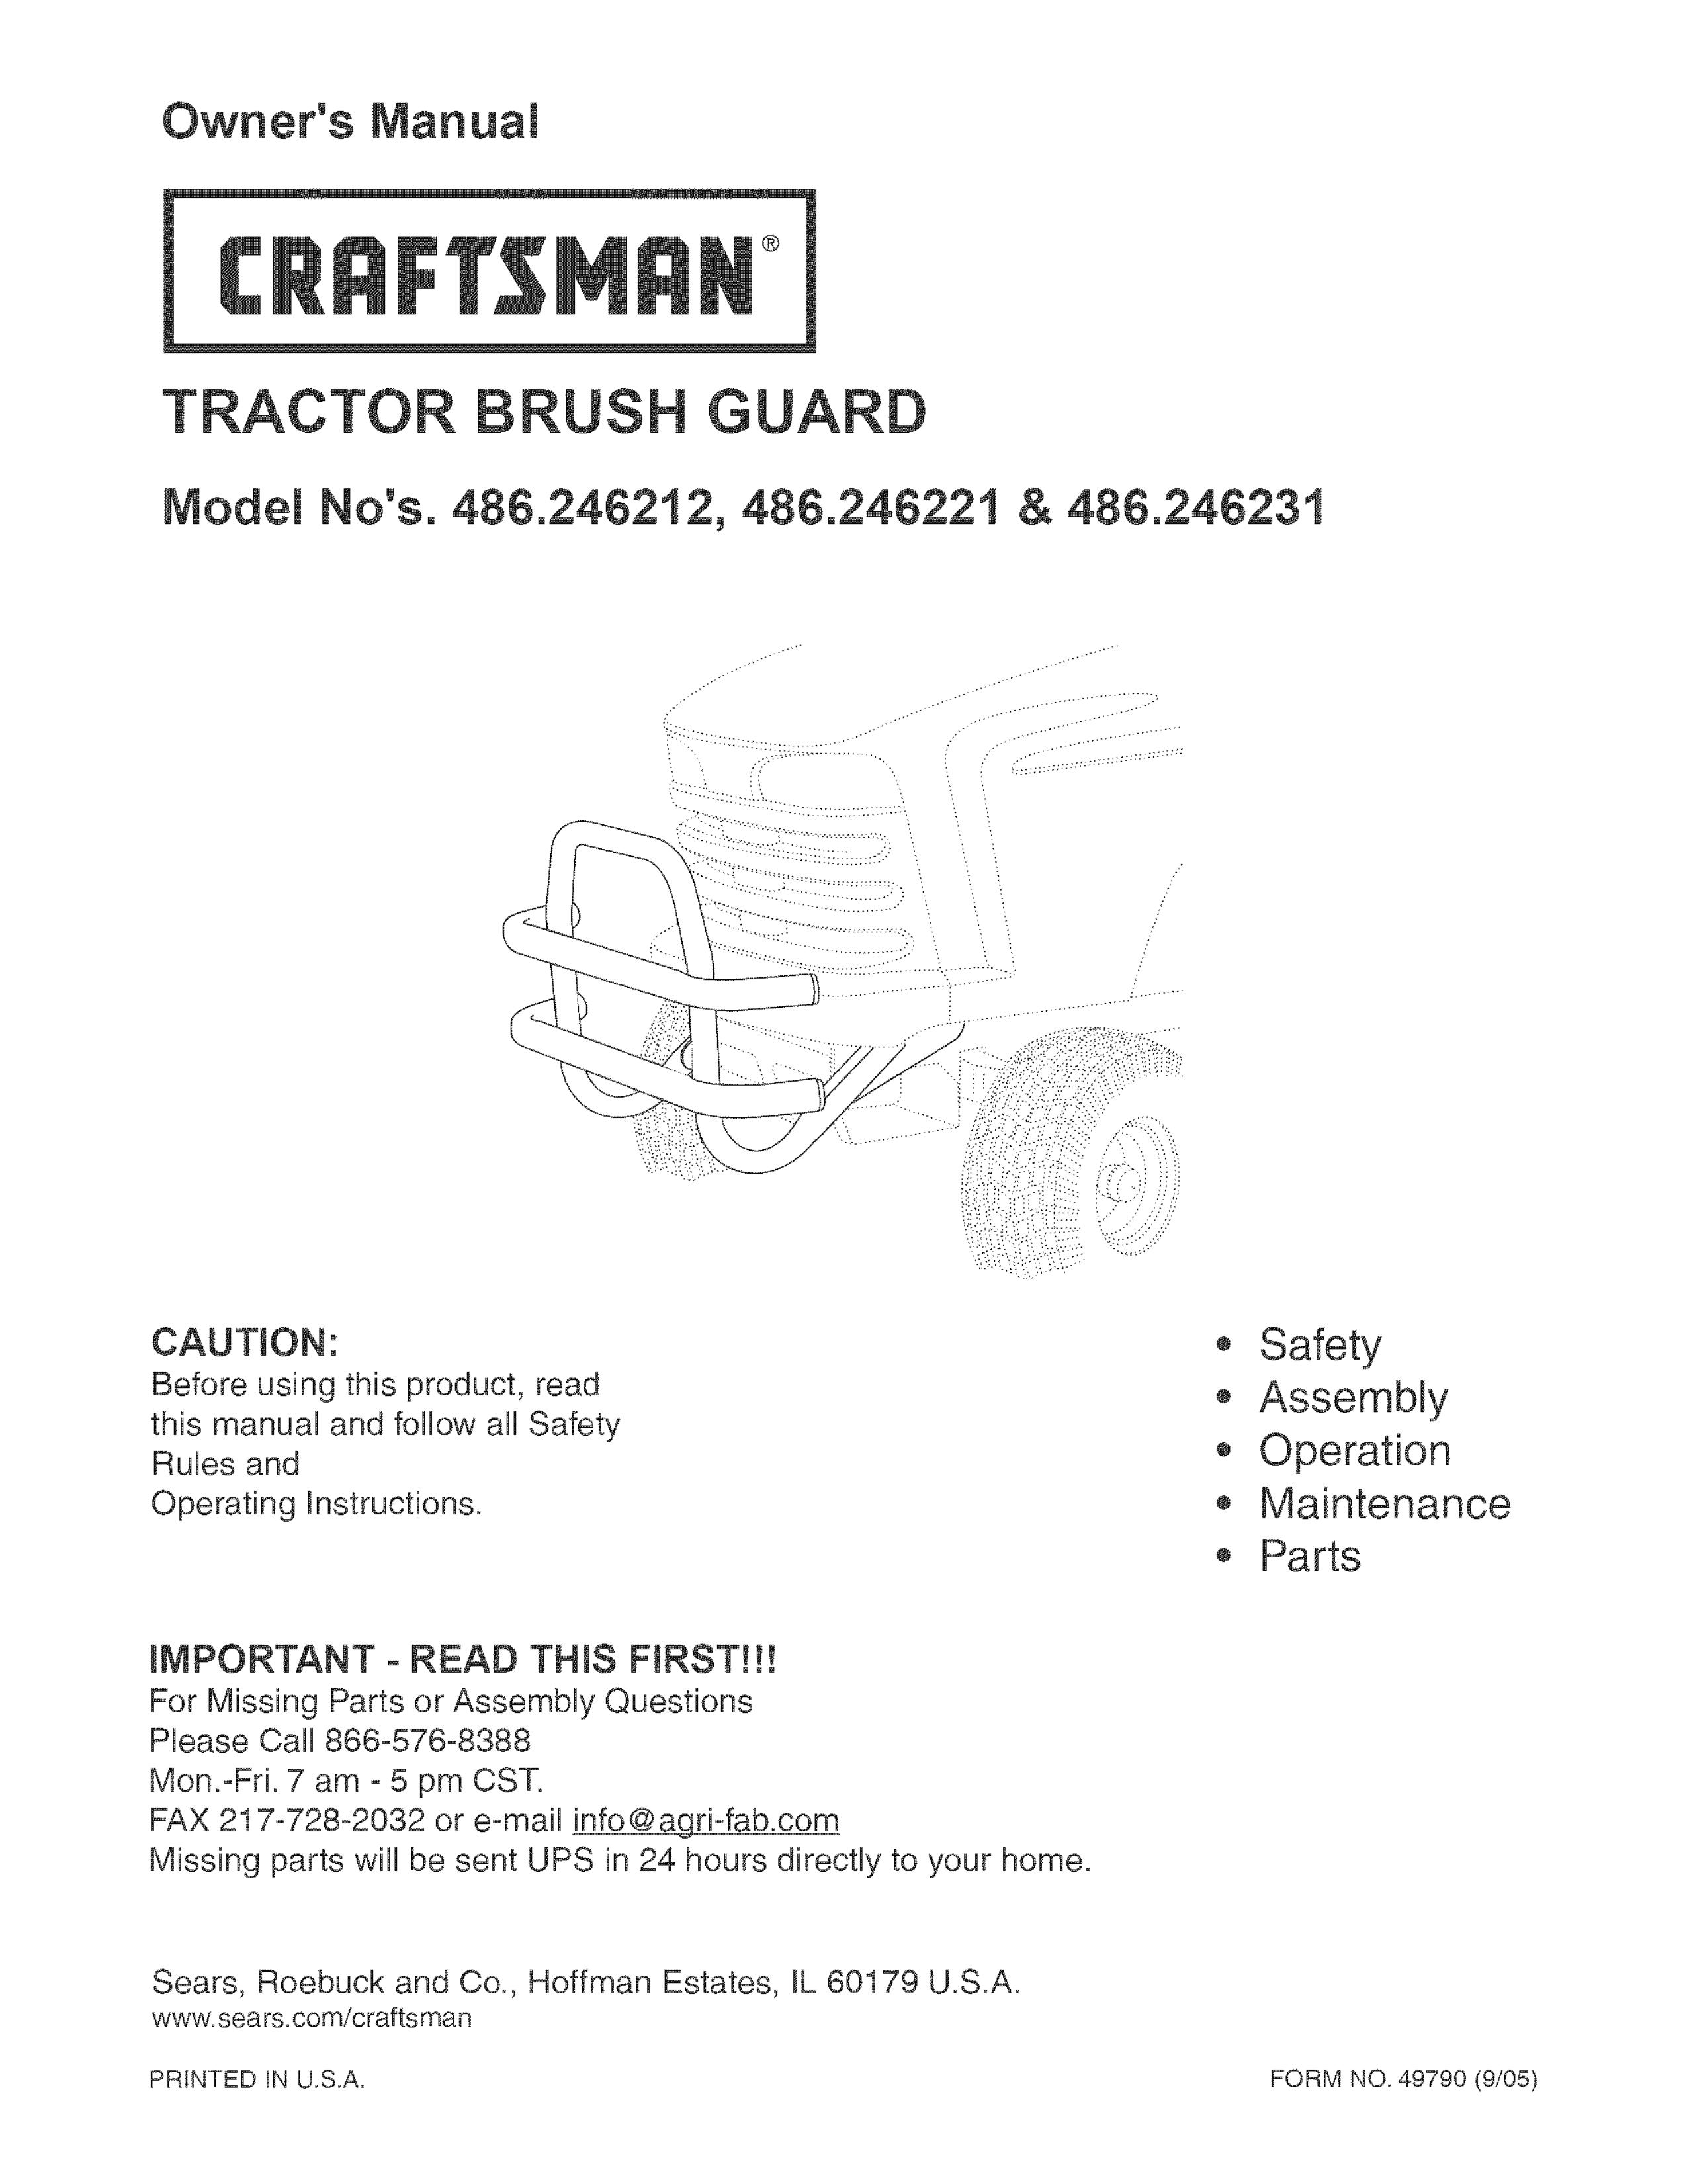 Craftsman 486.246231 Lawn Mower Accessory User Manual